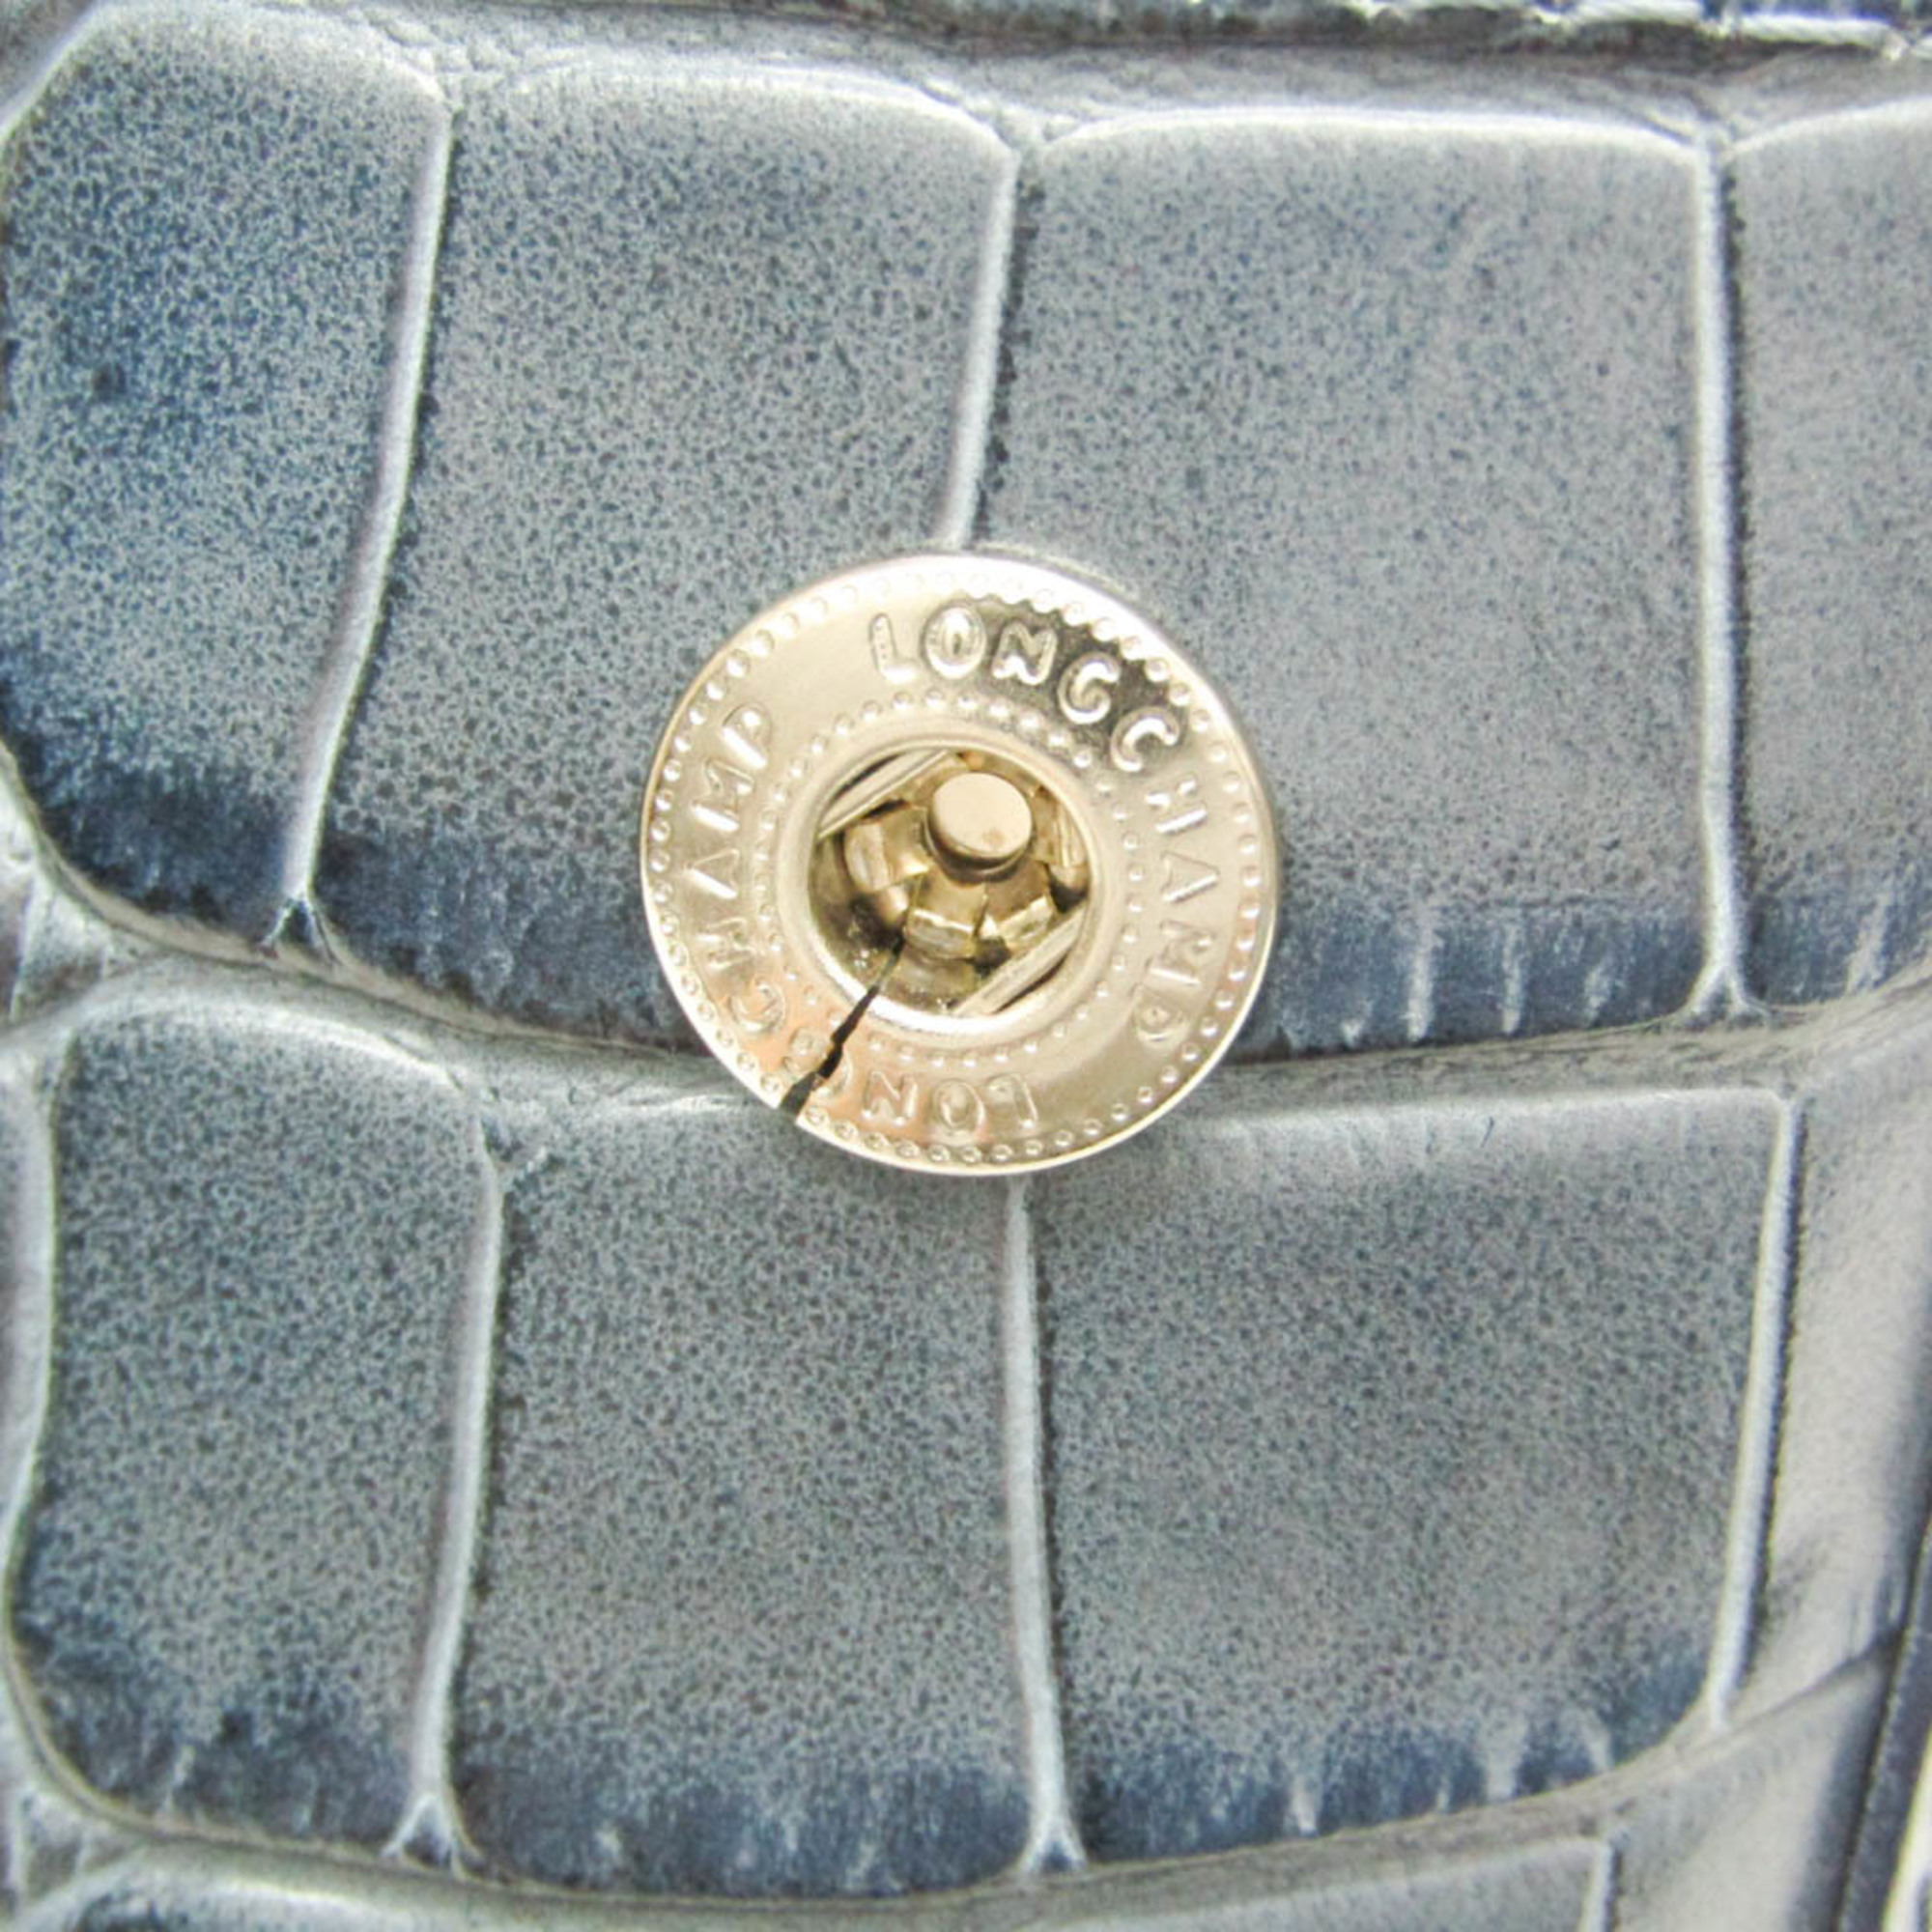 Longchamp ROSEAU Women's Leather Tote Bag Light Blue Gray